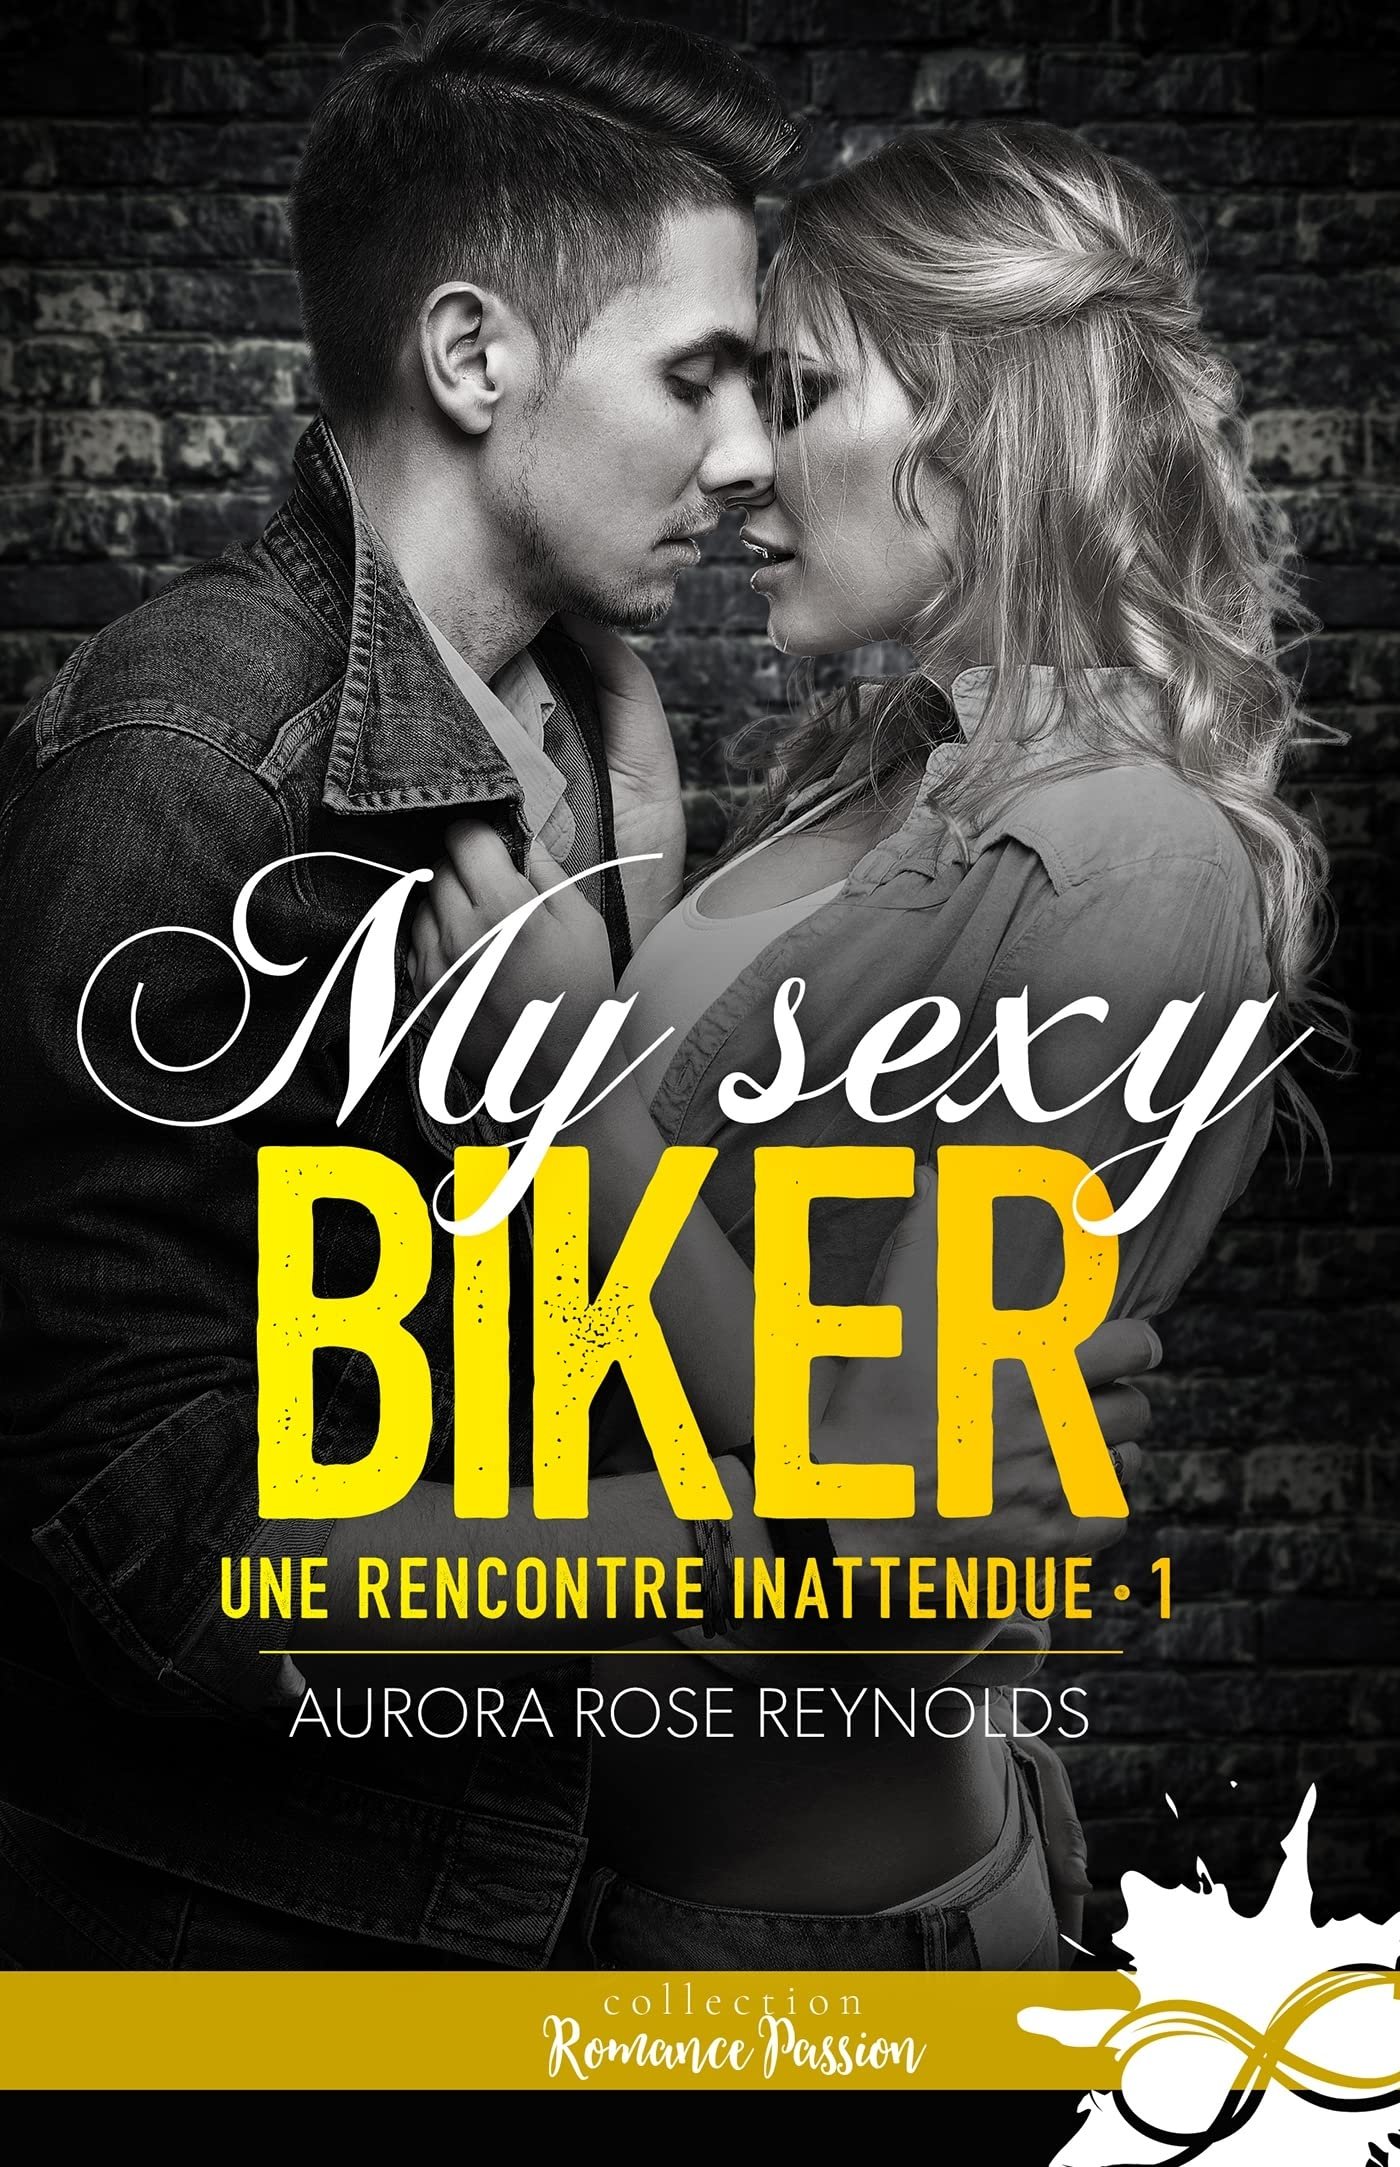 Aurora Rose Reynolds – Une rencontre inattendue, Tome 1 : My sexy biker